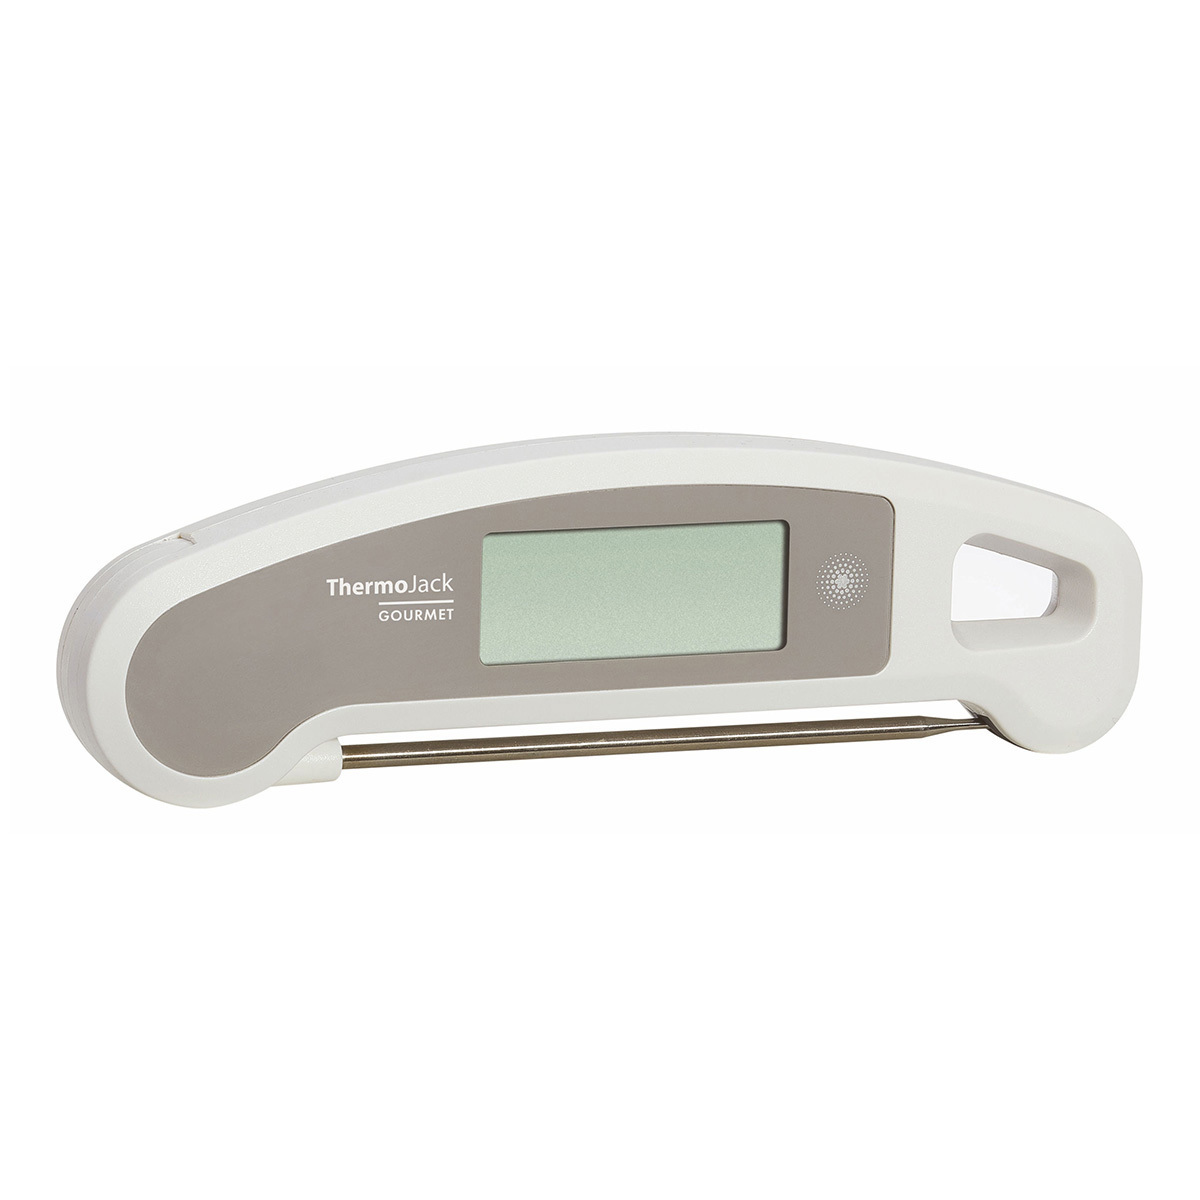 30-1060-02-profi-küchenthermometer-thermo-jack-gourmet-ansicht1-1200x1200px.jpg